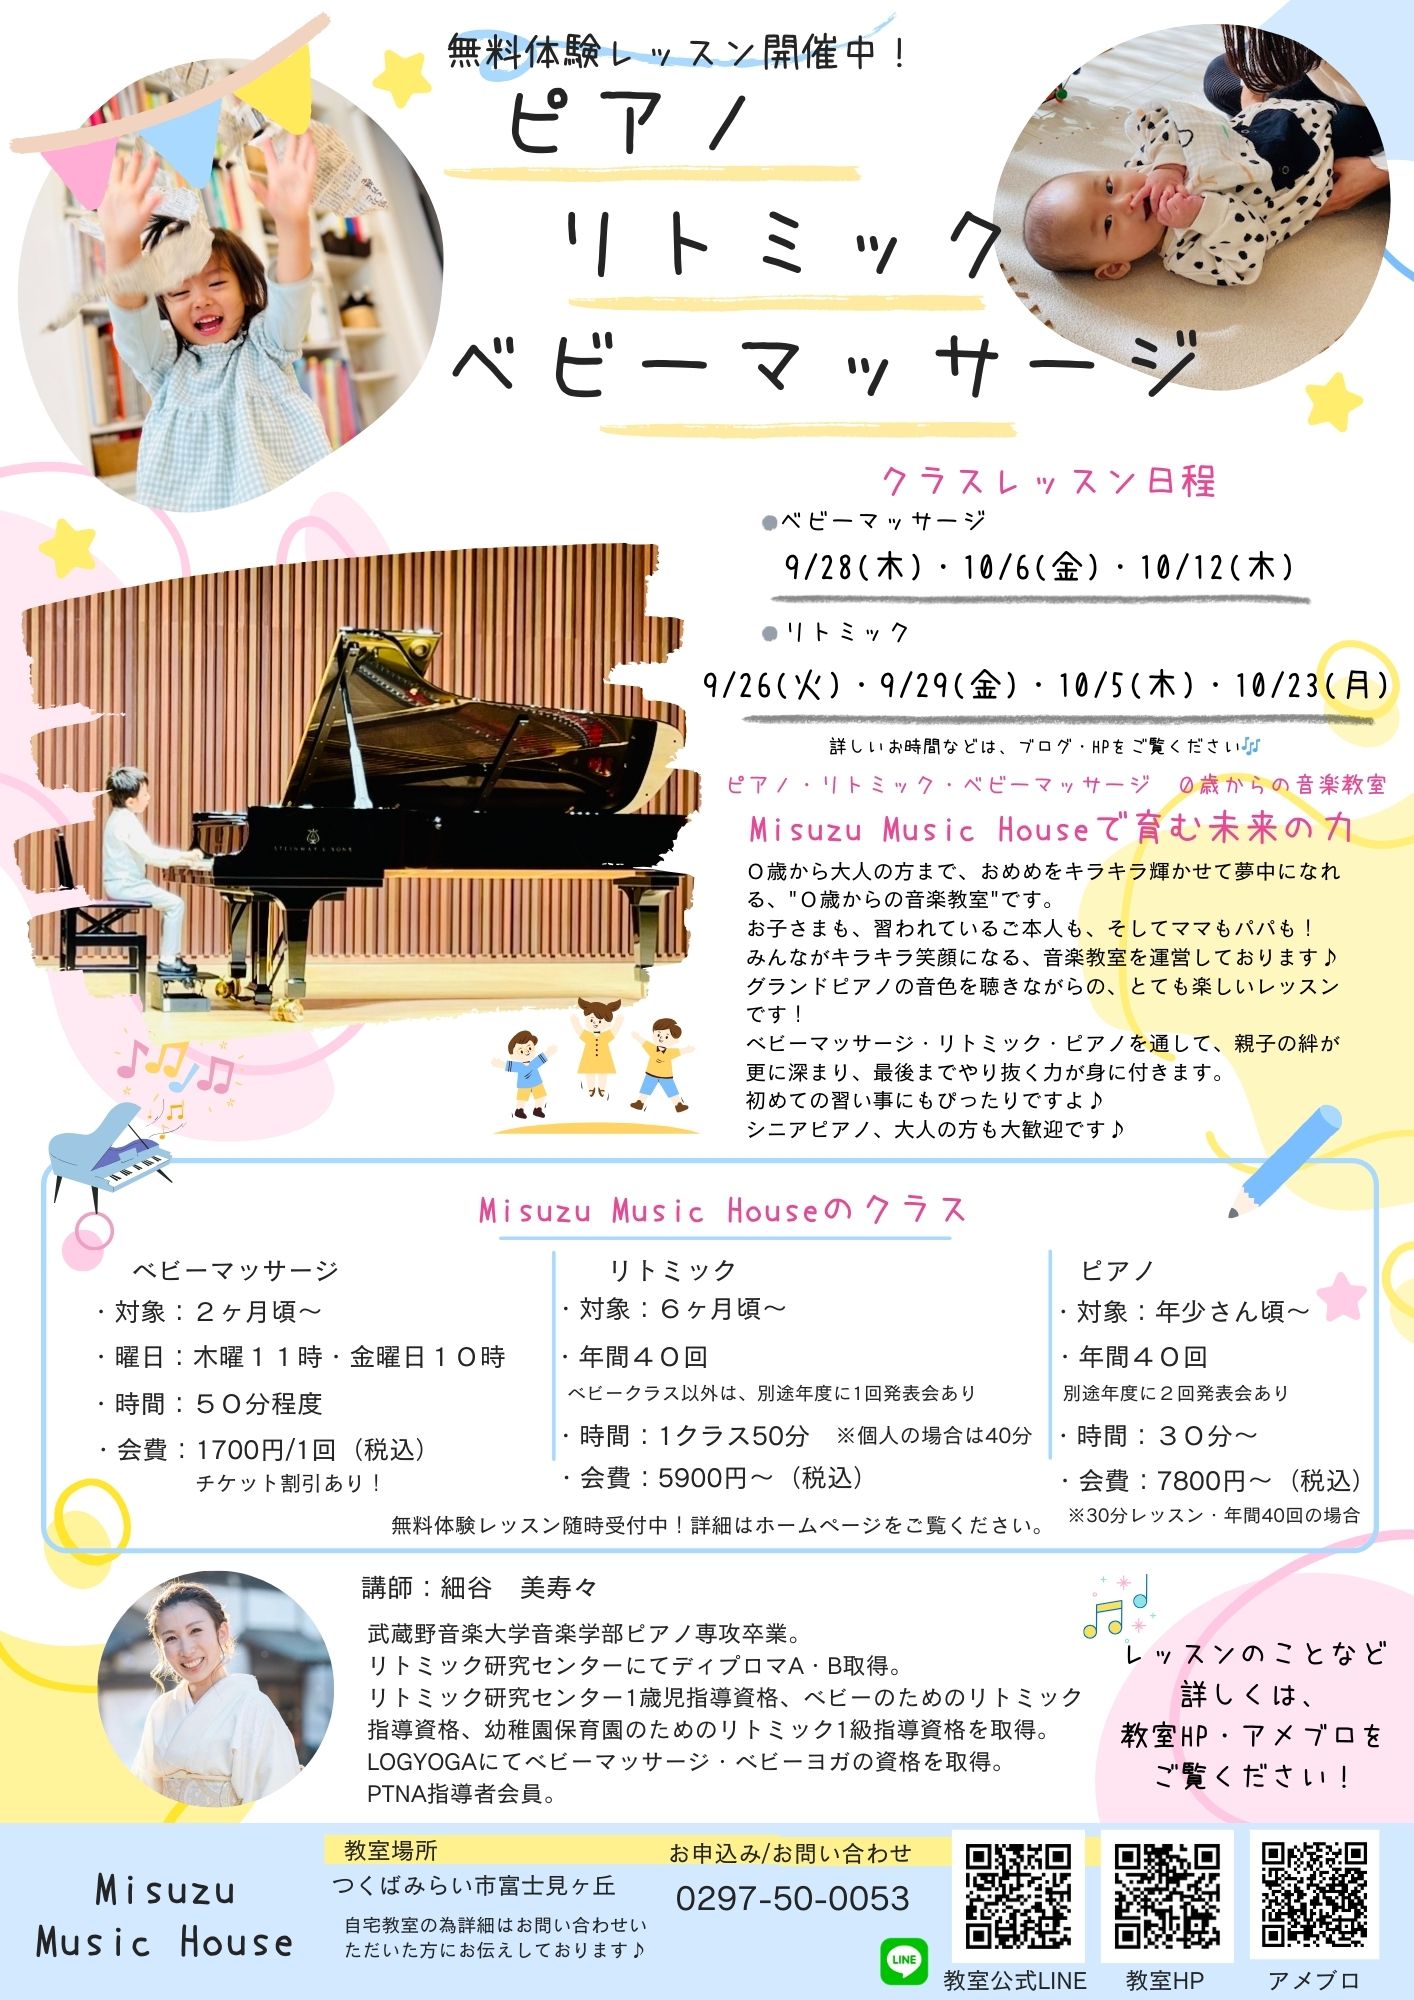 image50.jpg alt="つくばみらい市ピアノ・リトミック・ベビーマッサージの音楽教室Misuzu Music House"